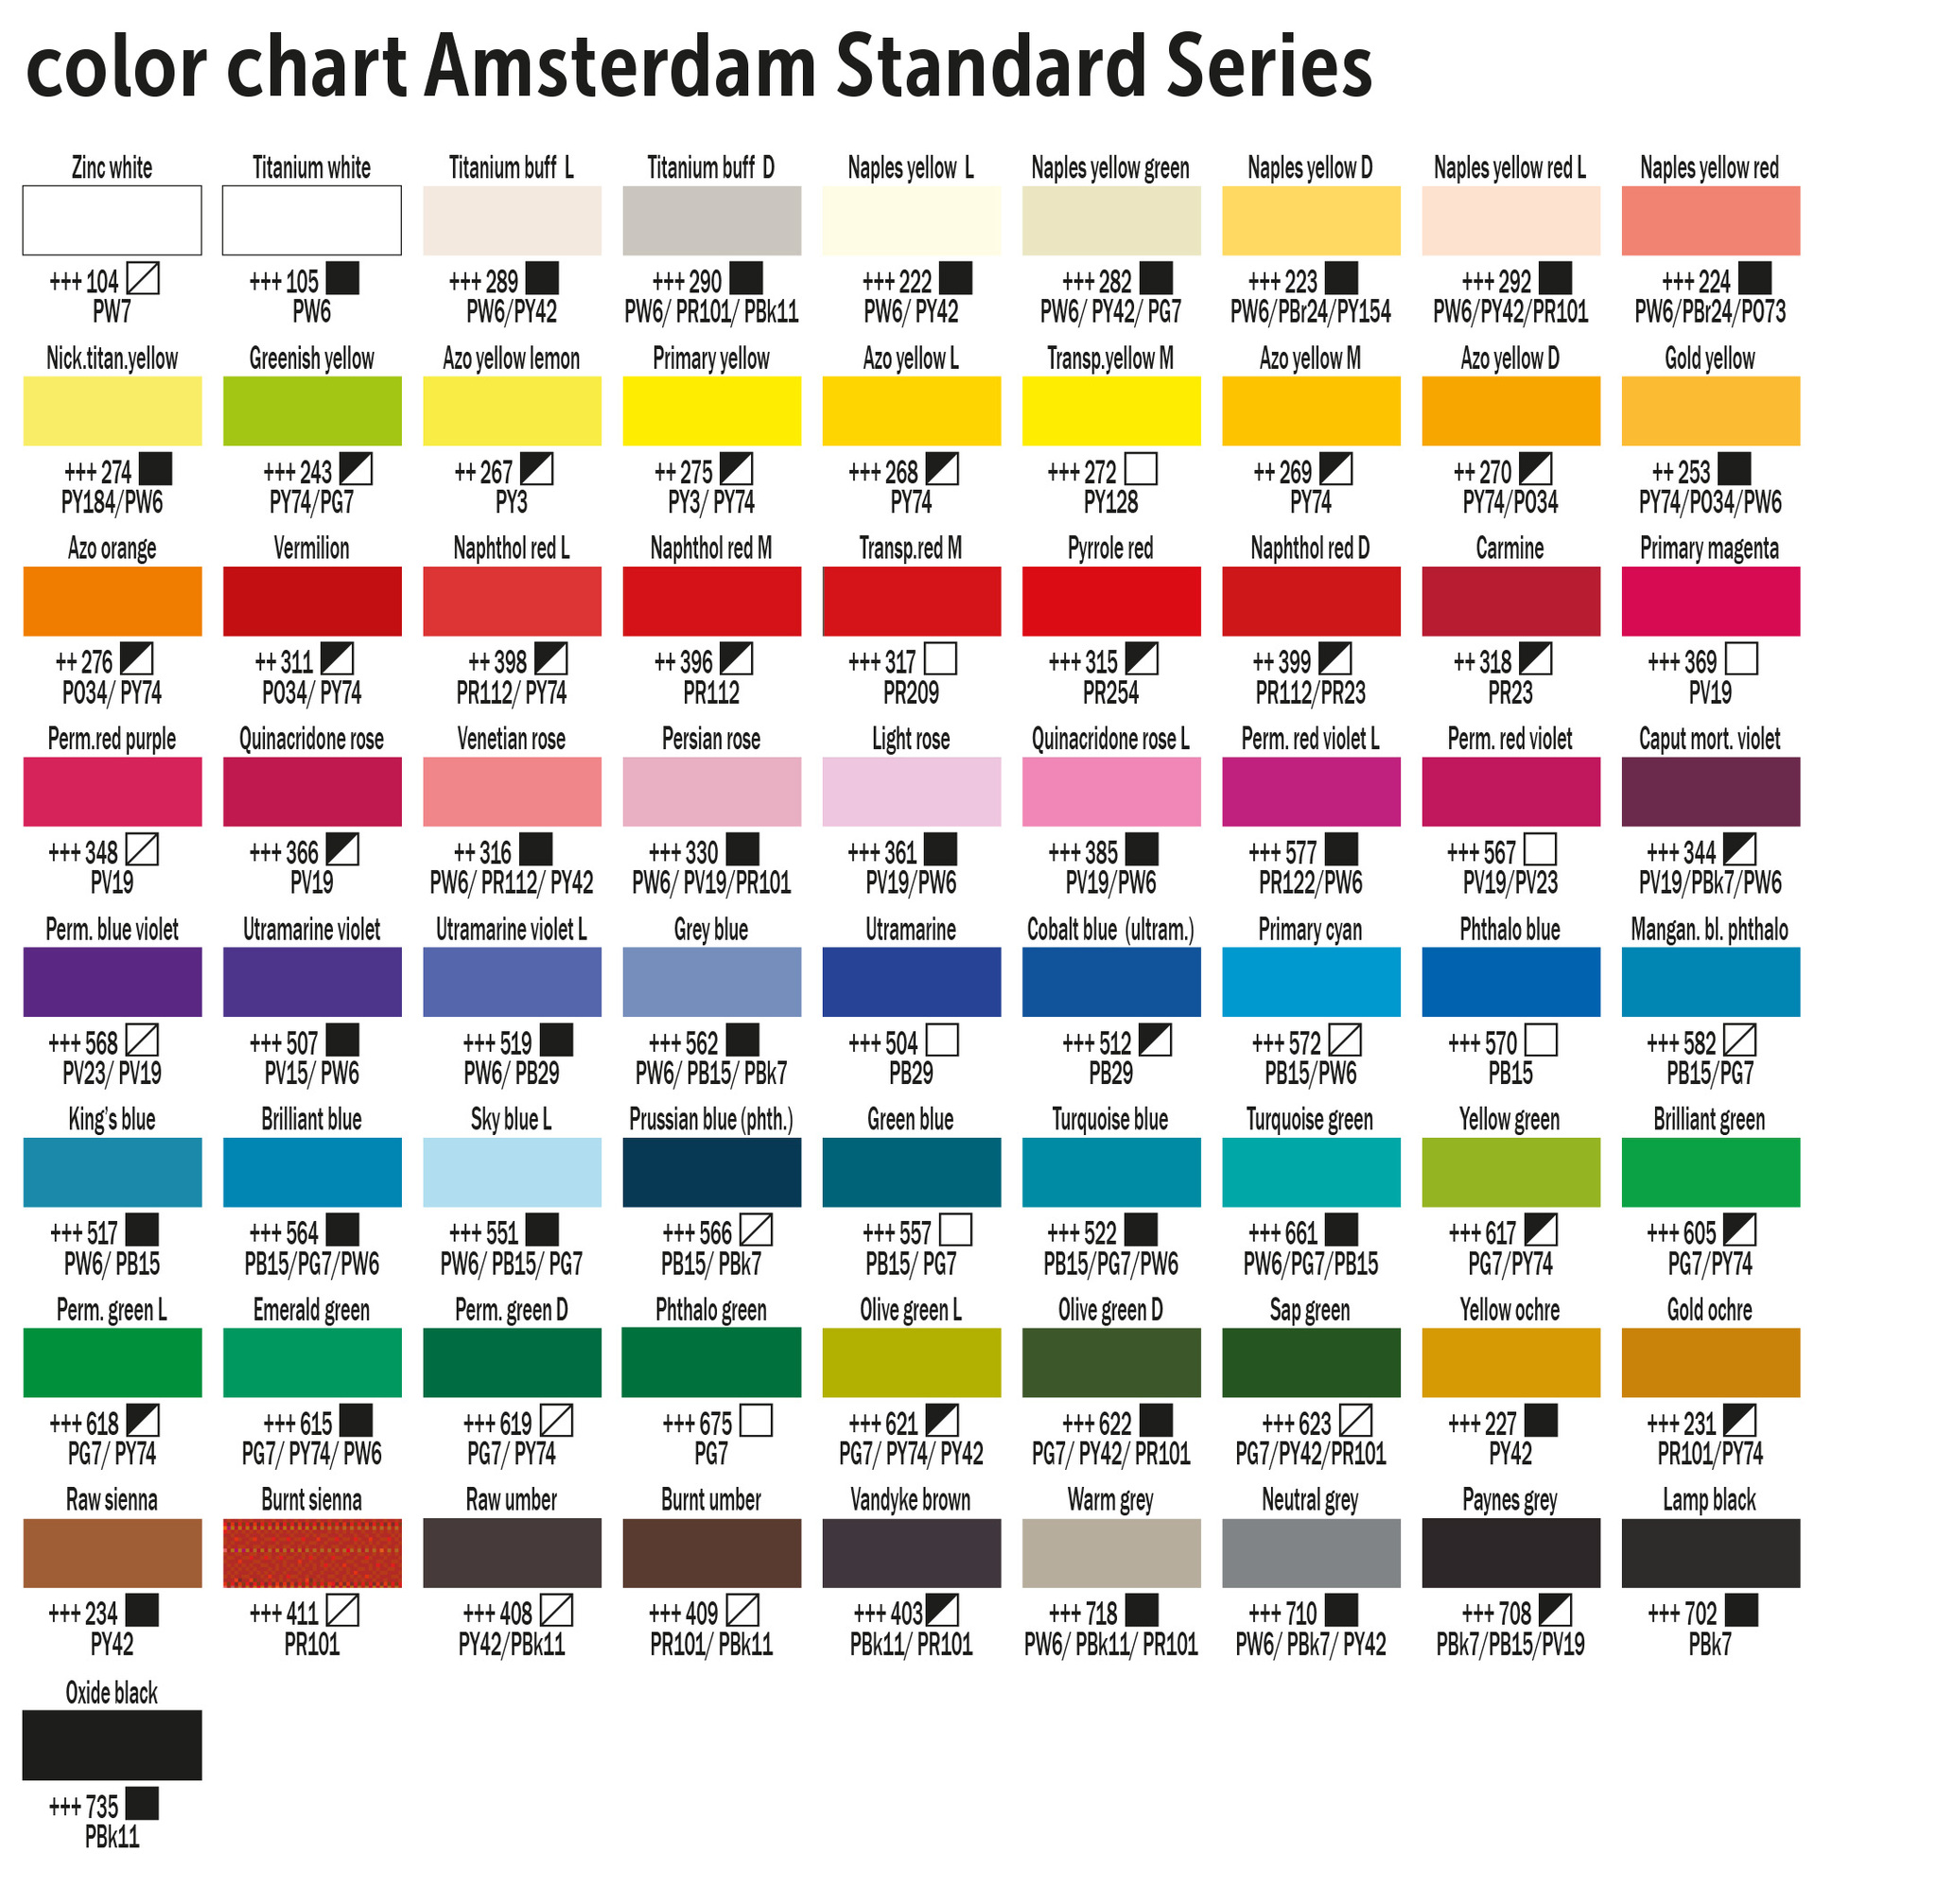 Amsterdam-500ml-348-Permanent red purple